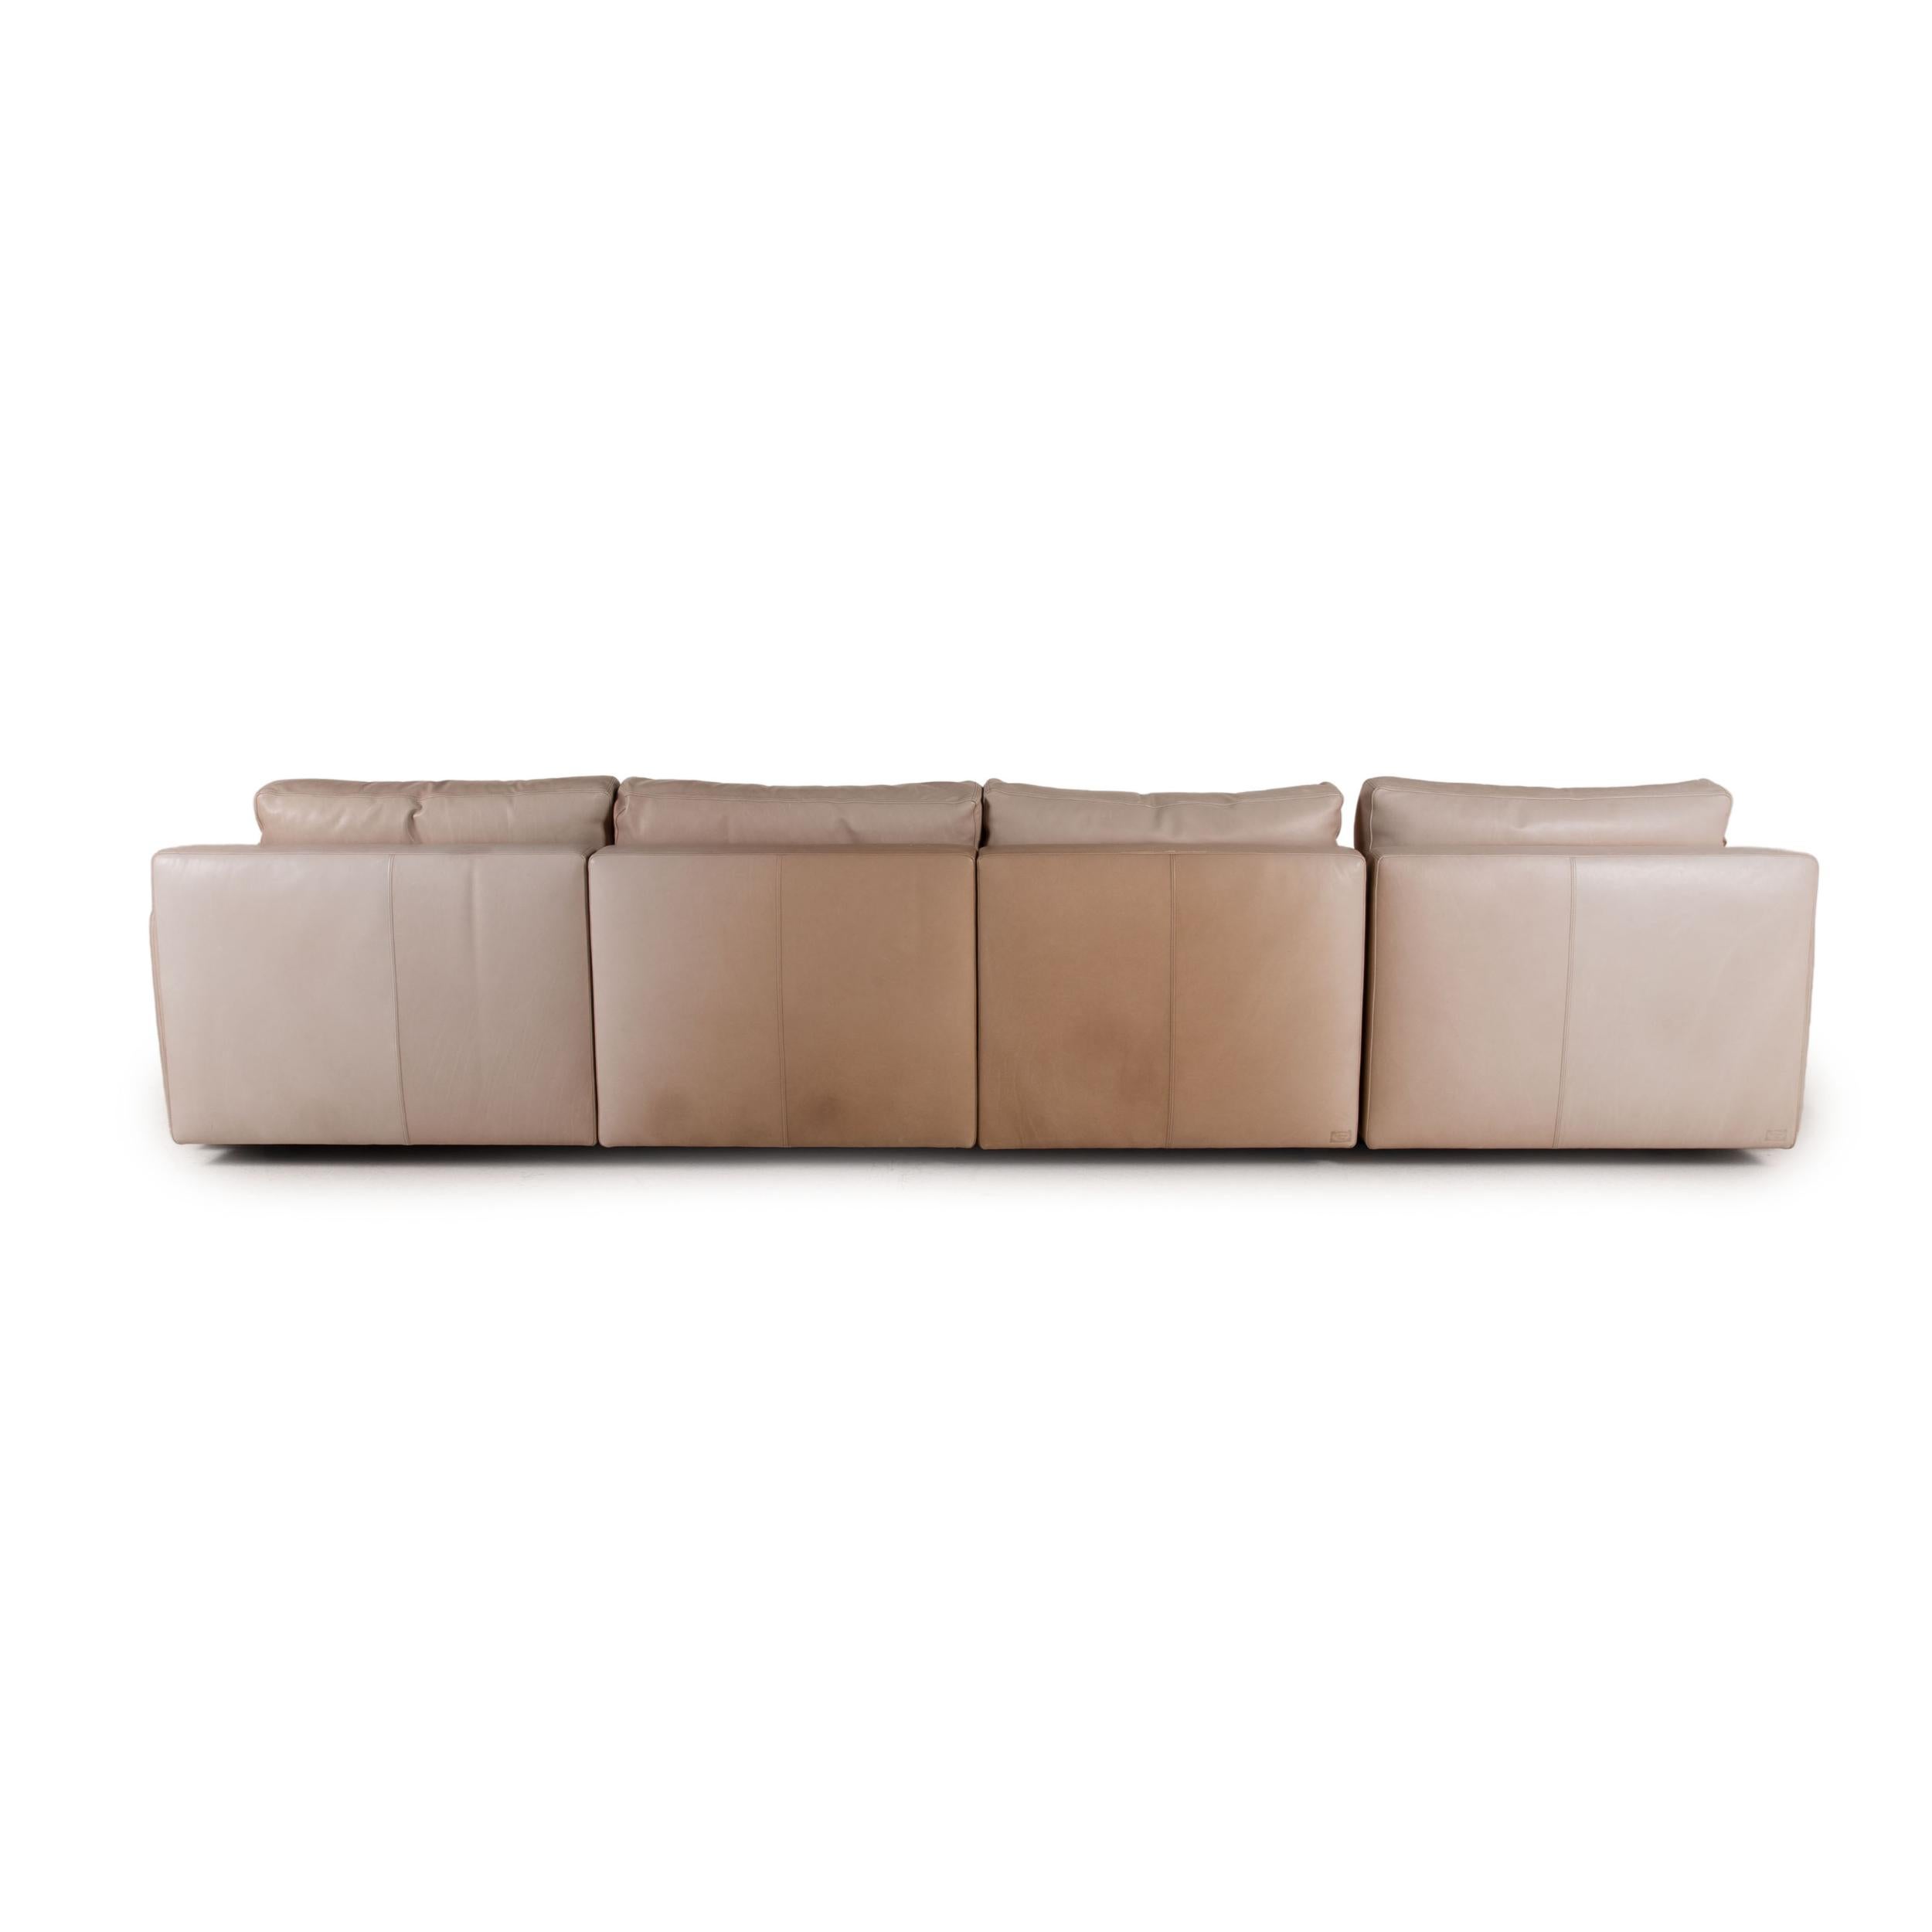 Contemporary Poltrona Frau Massimosistema Leather Sofa Beige Corner Sofa Couch For Sale